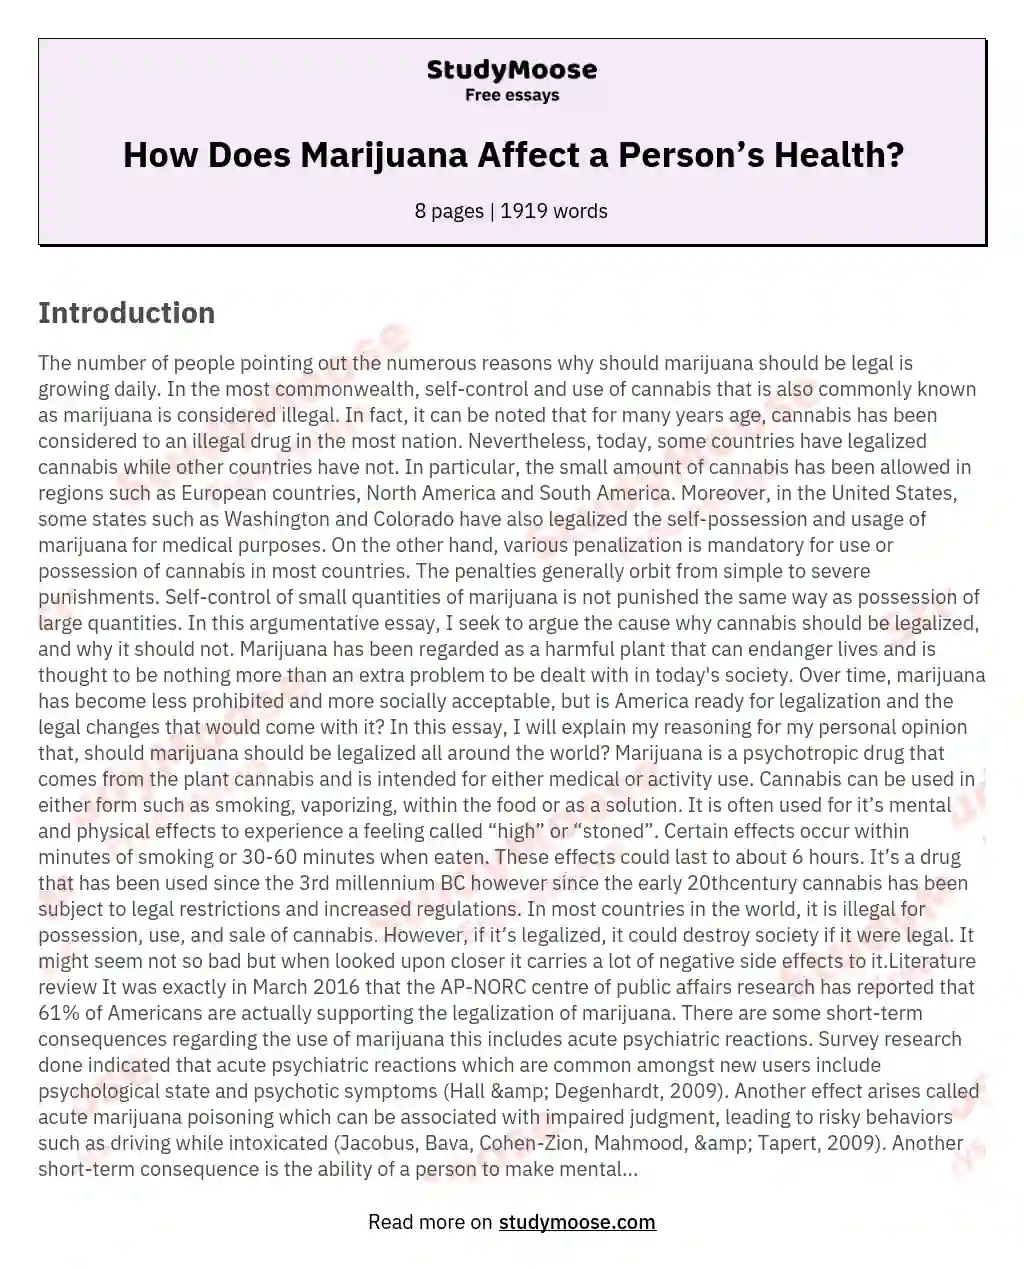 How Does Marijuana Affect a Person’s Health? essay